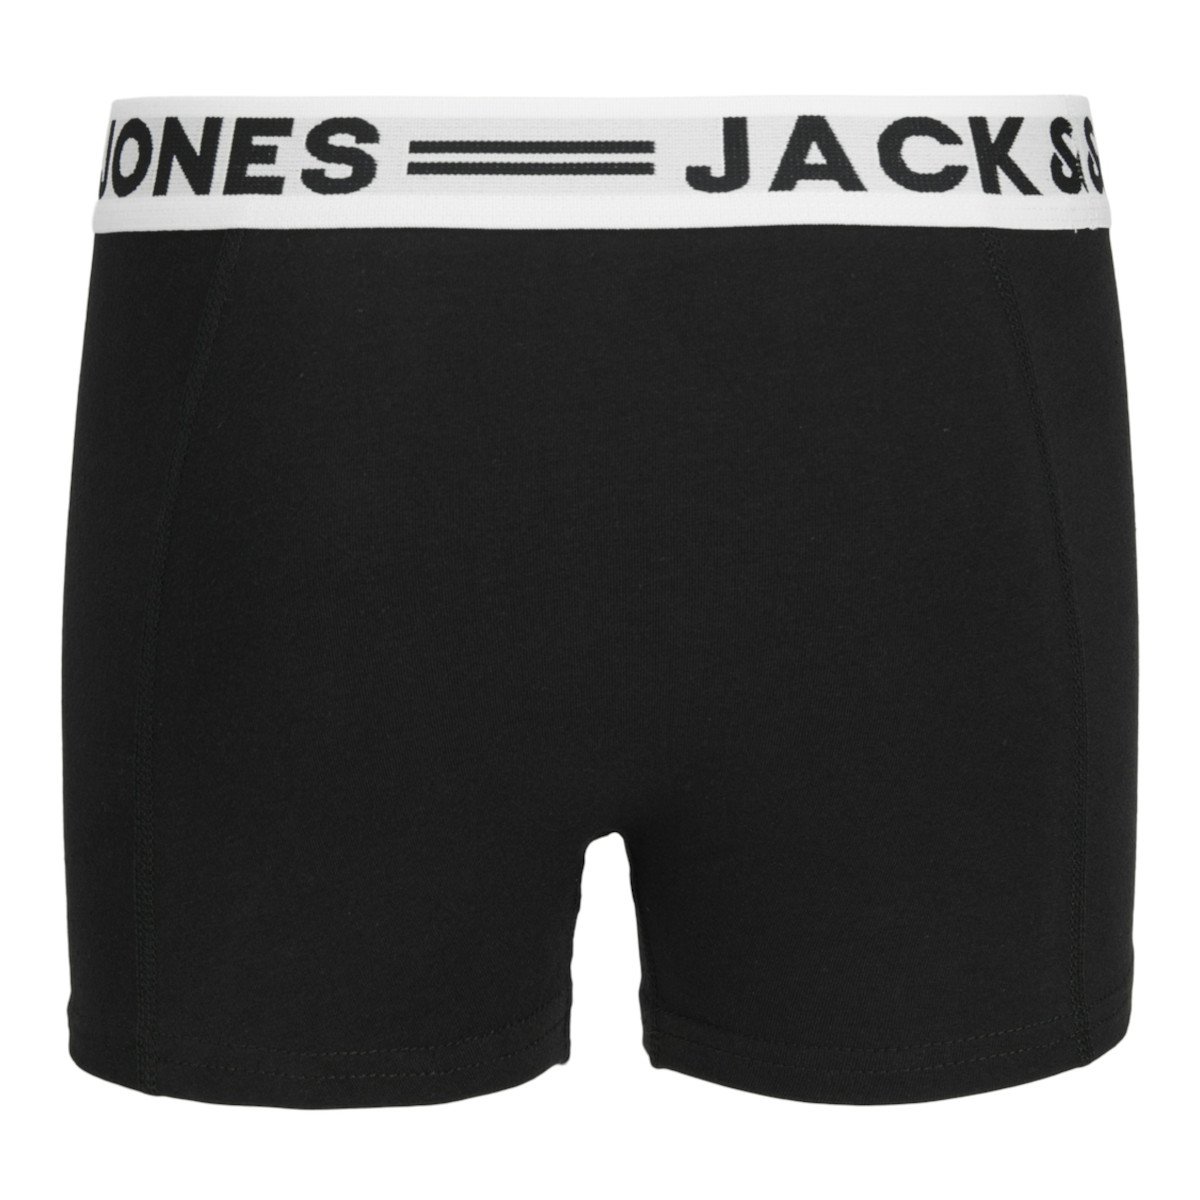 JACK & JONES SENSE boxerit 3kpl, Black